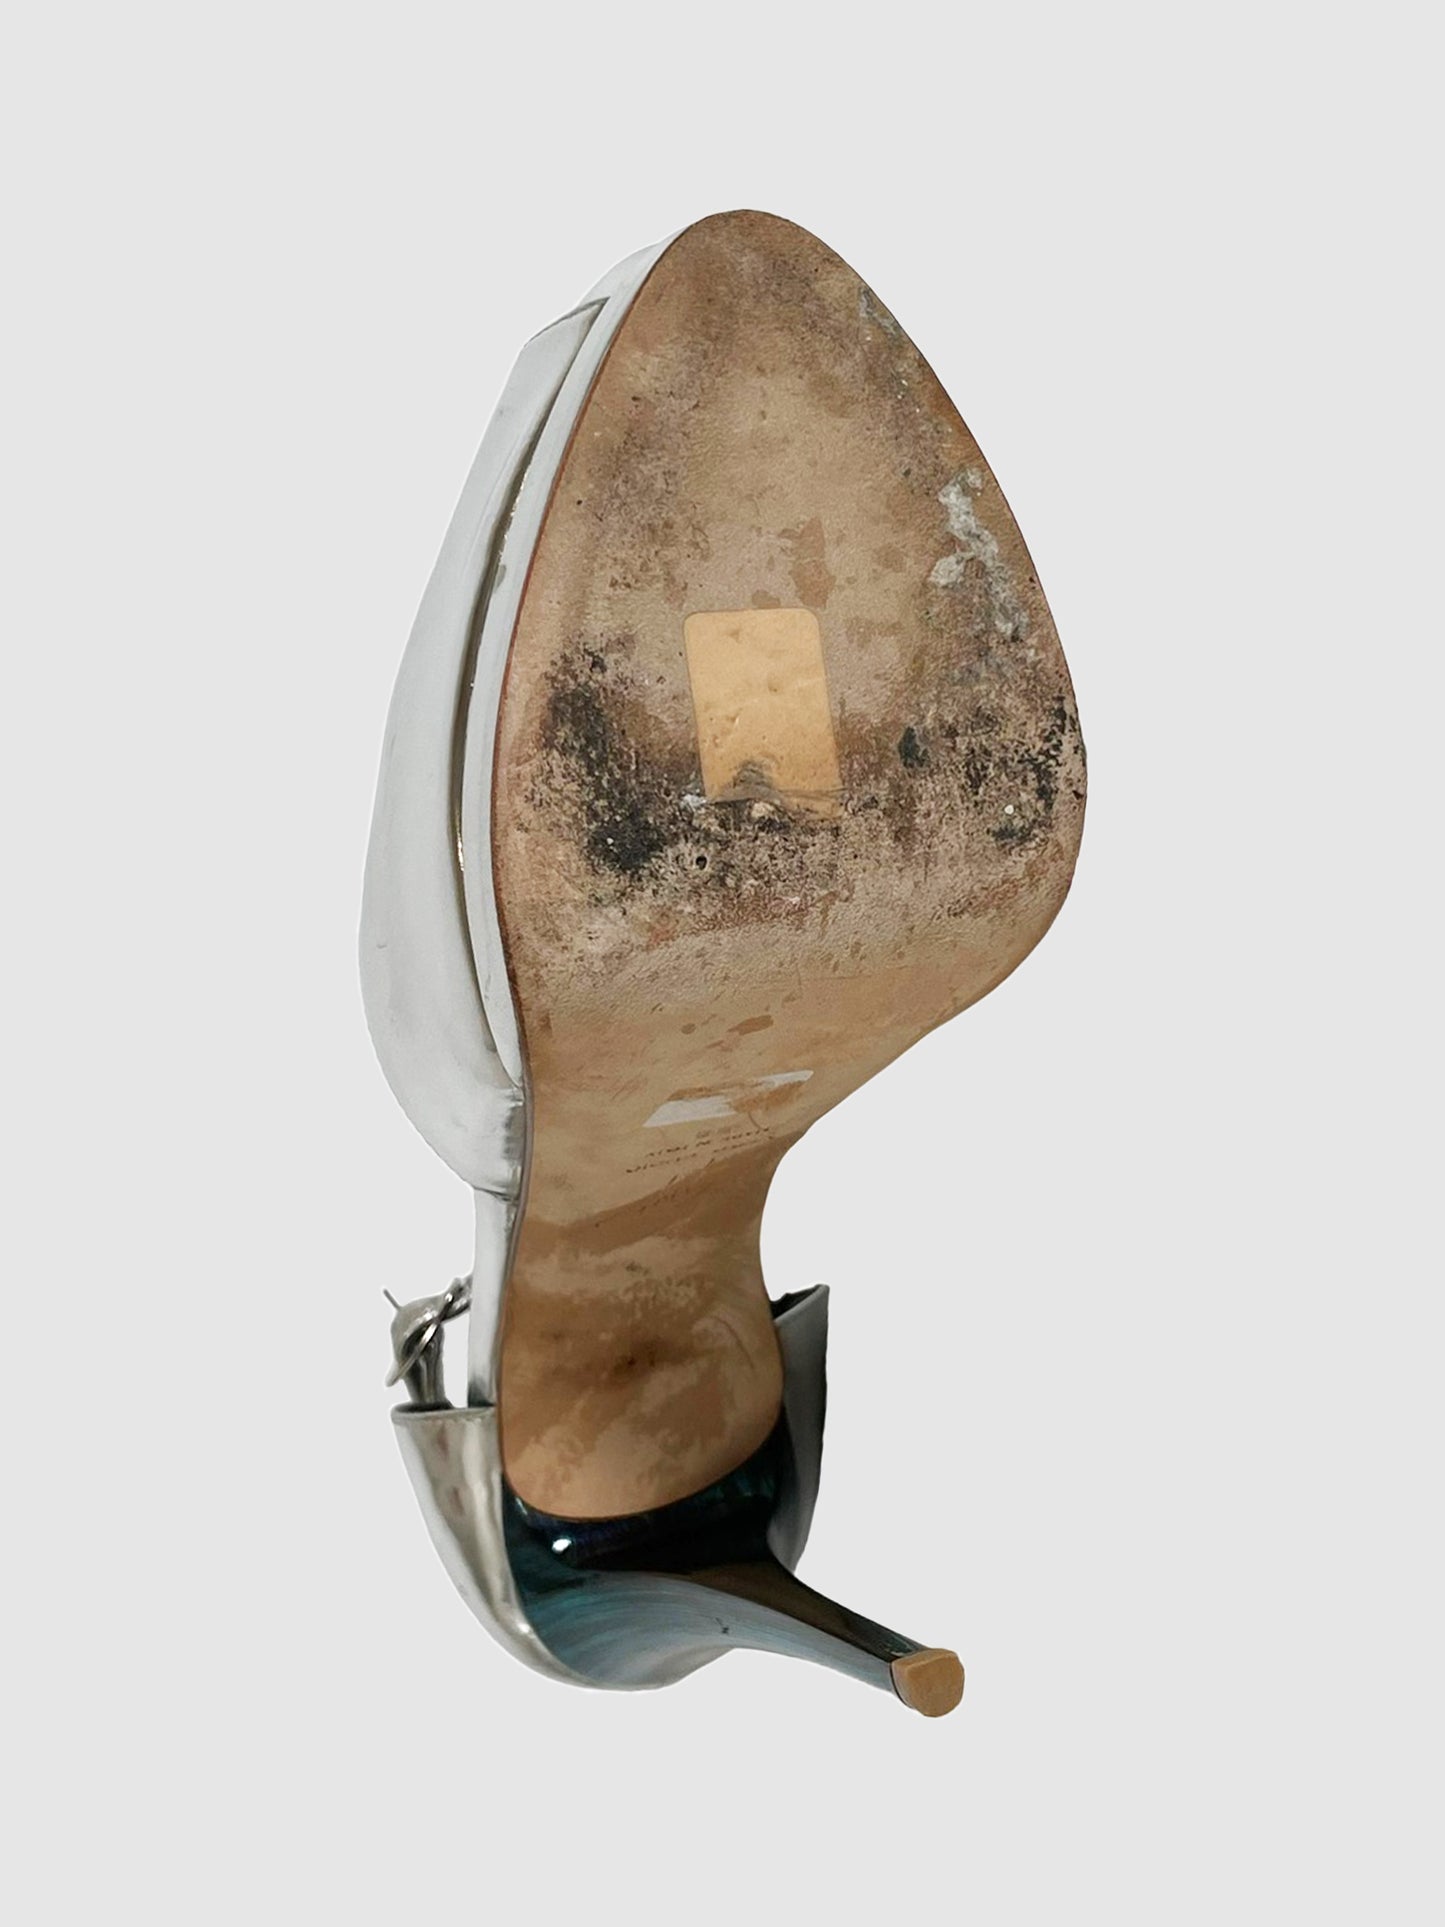 Giuseppe Zanotti Silver and Blue Platform Heels - Size 38